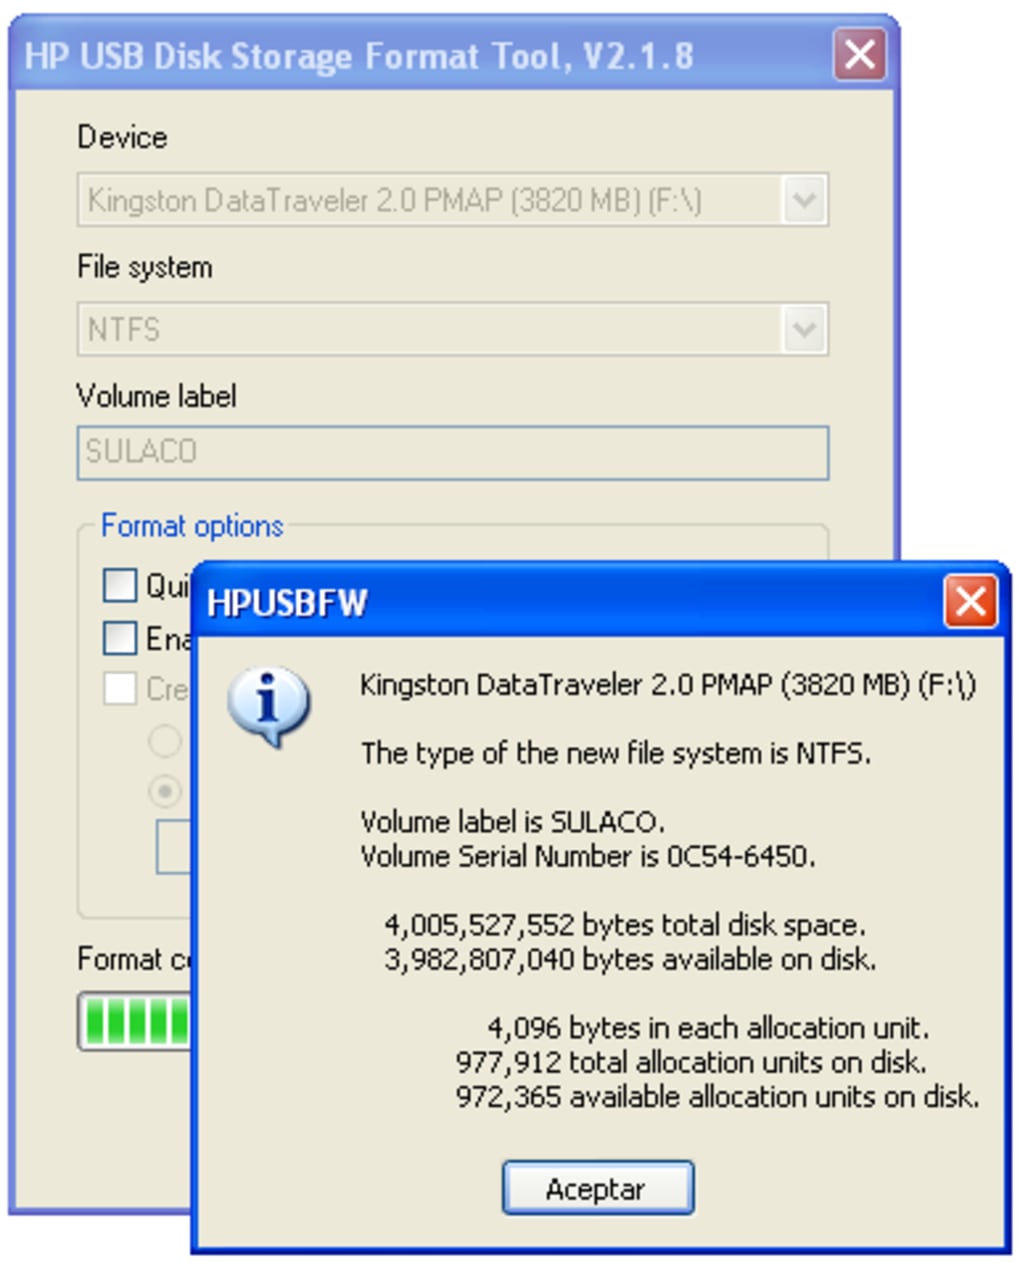 hp usb disk storage format tool v 2.1.8 gratuit